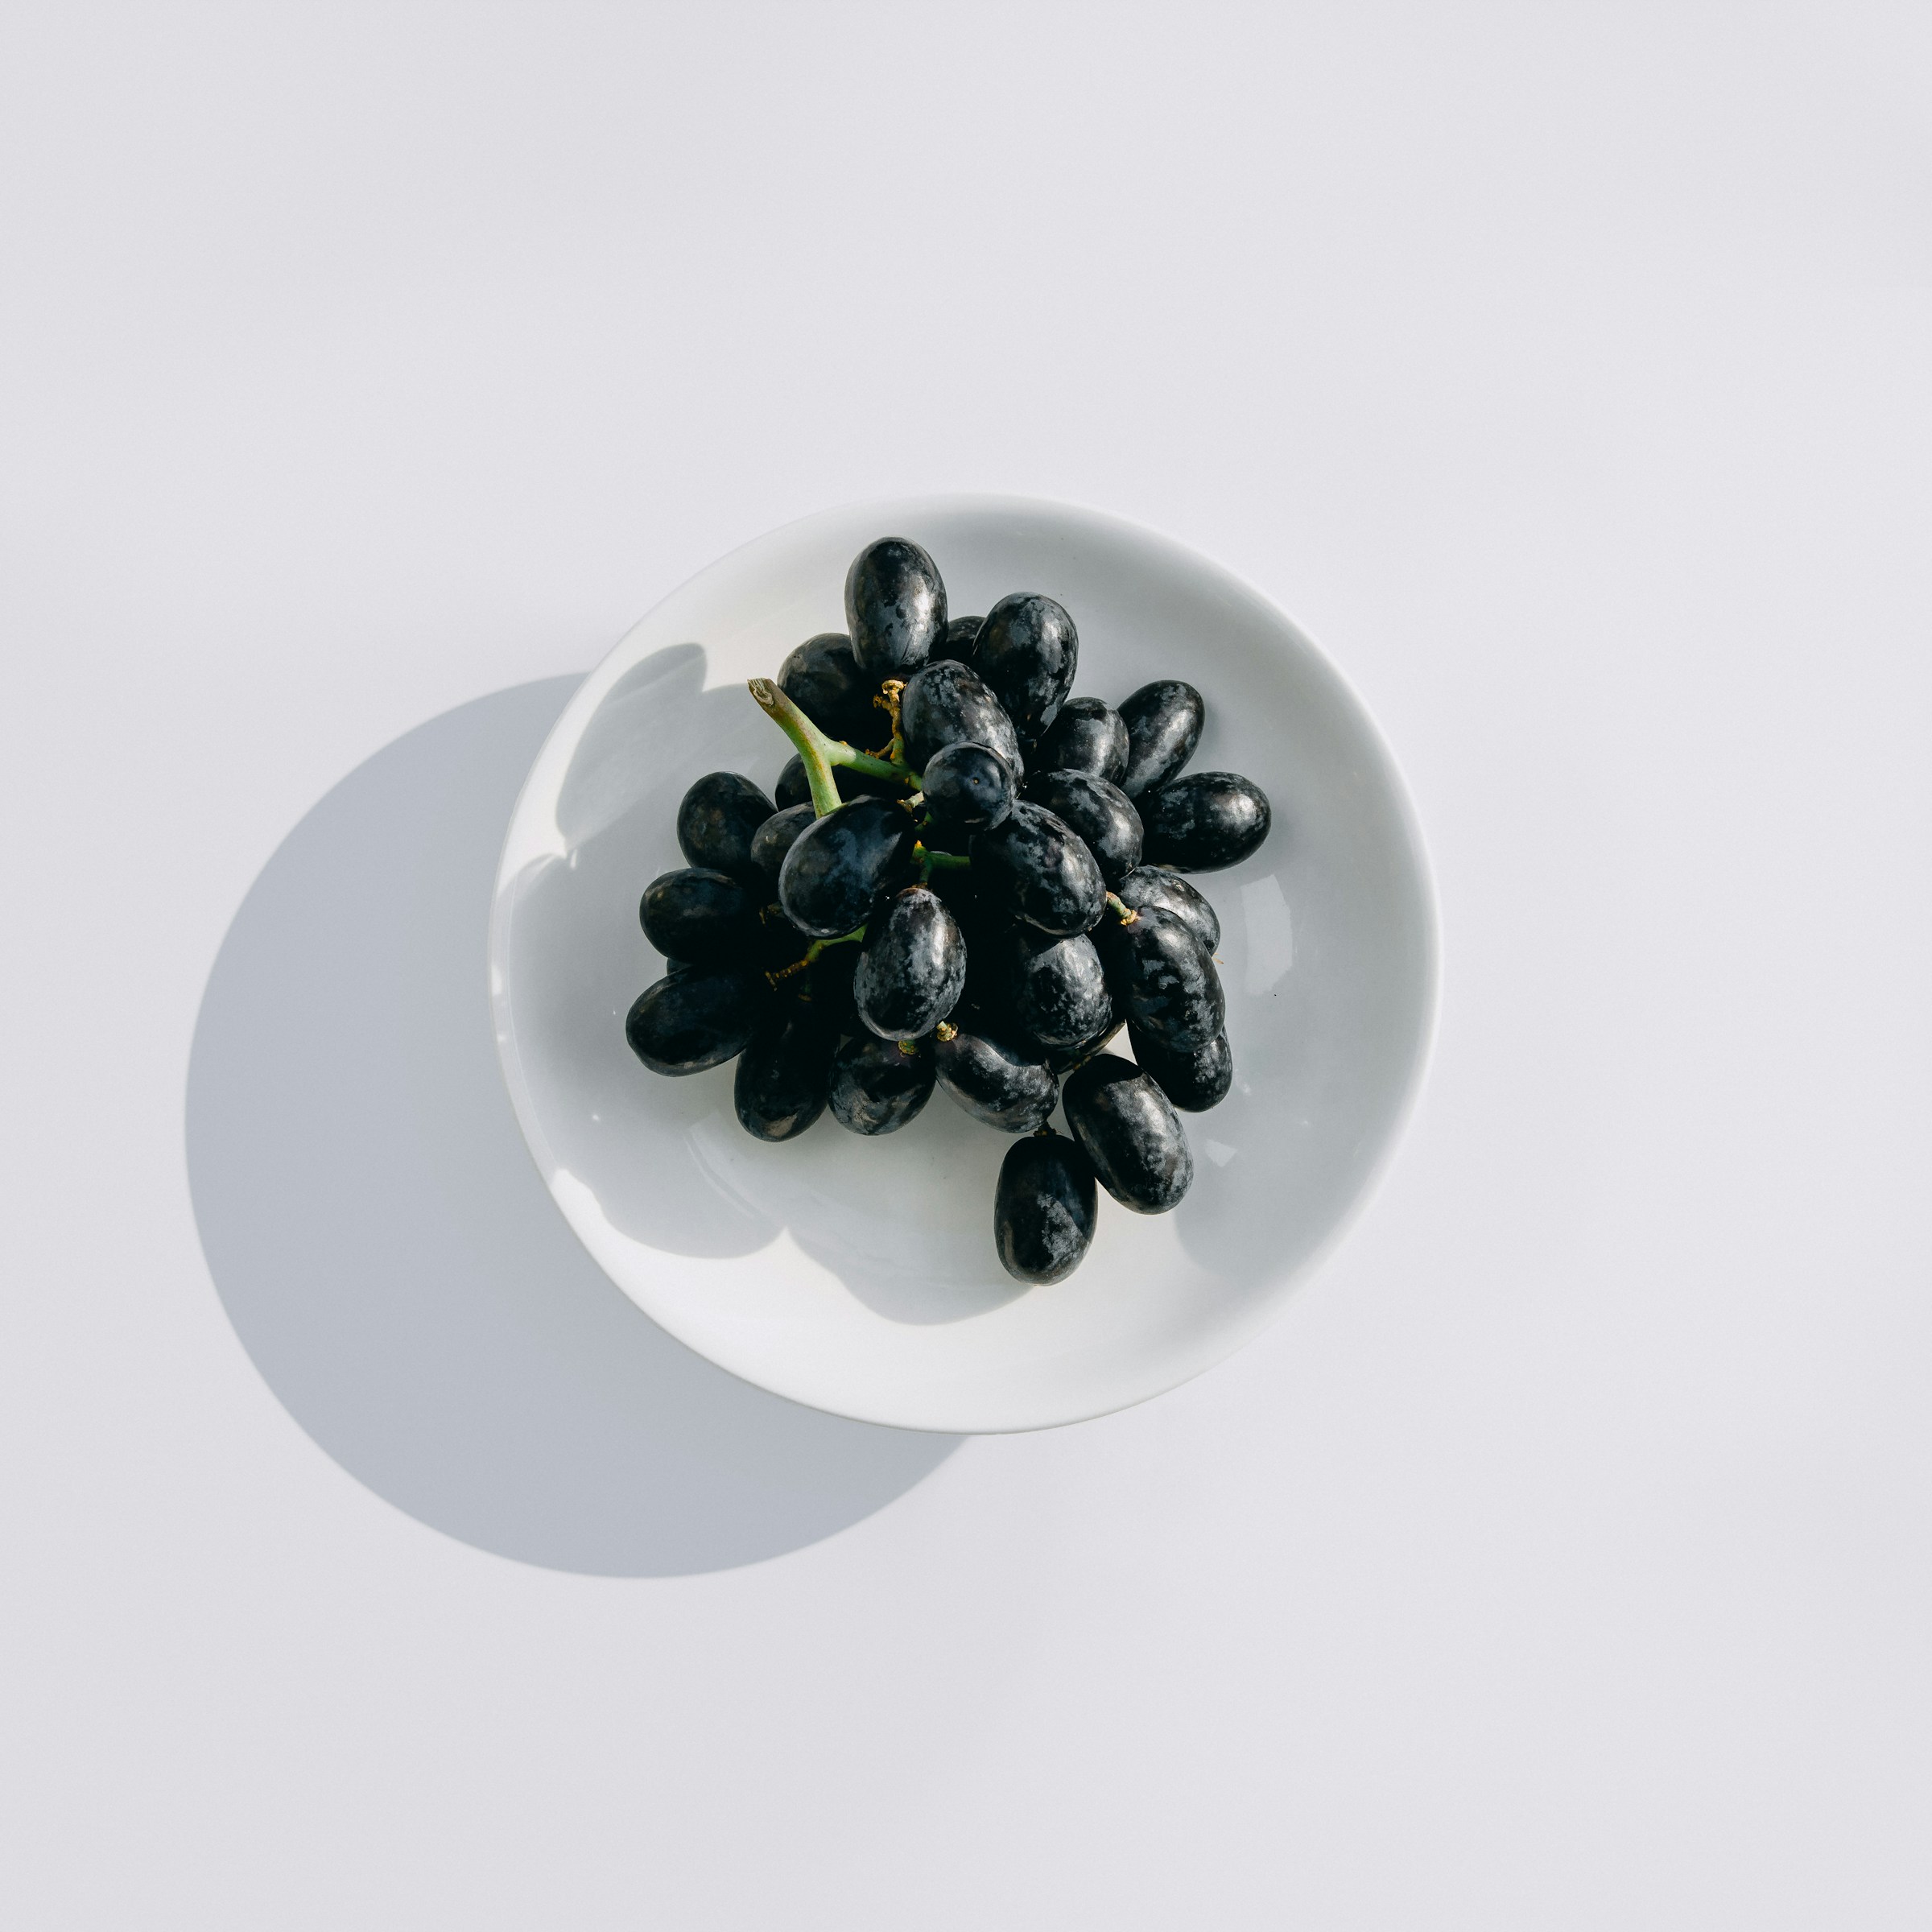 A bowl of grapes | Source: Unsplash